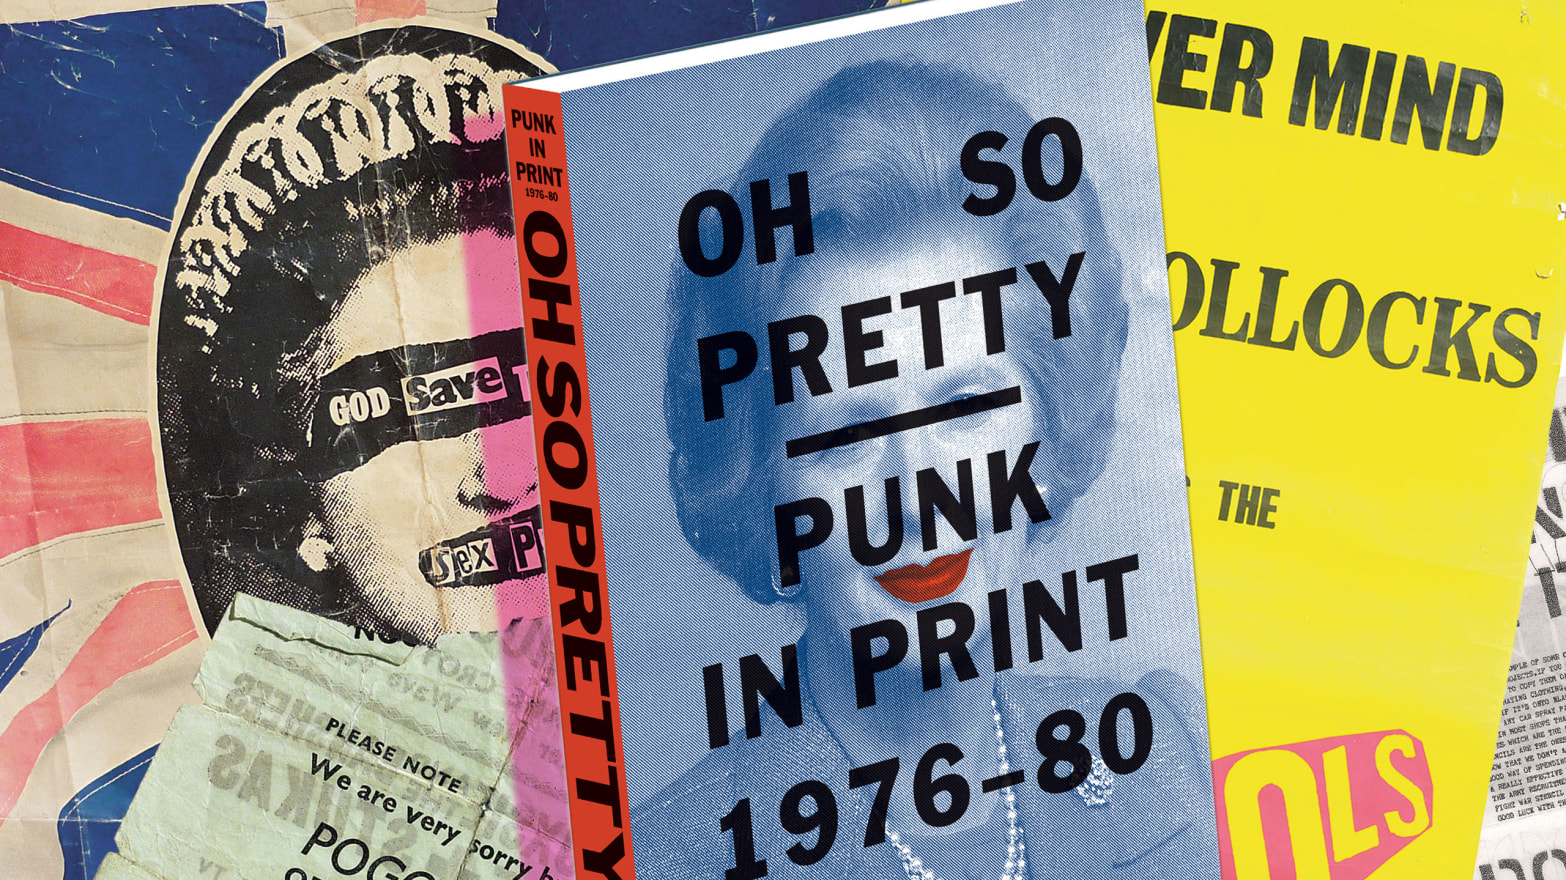 Oh So Pretty: Punk in Print 1976 - 80